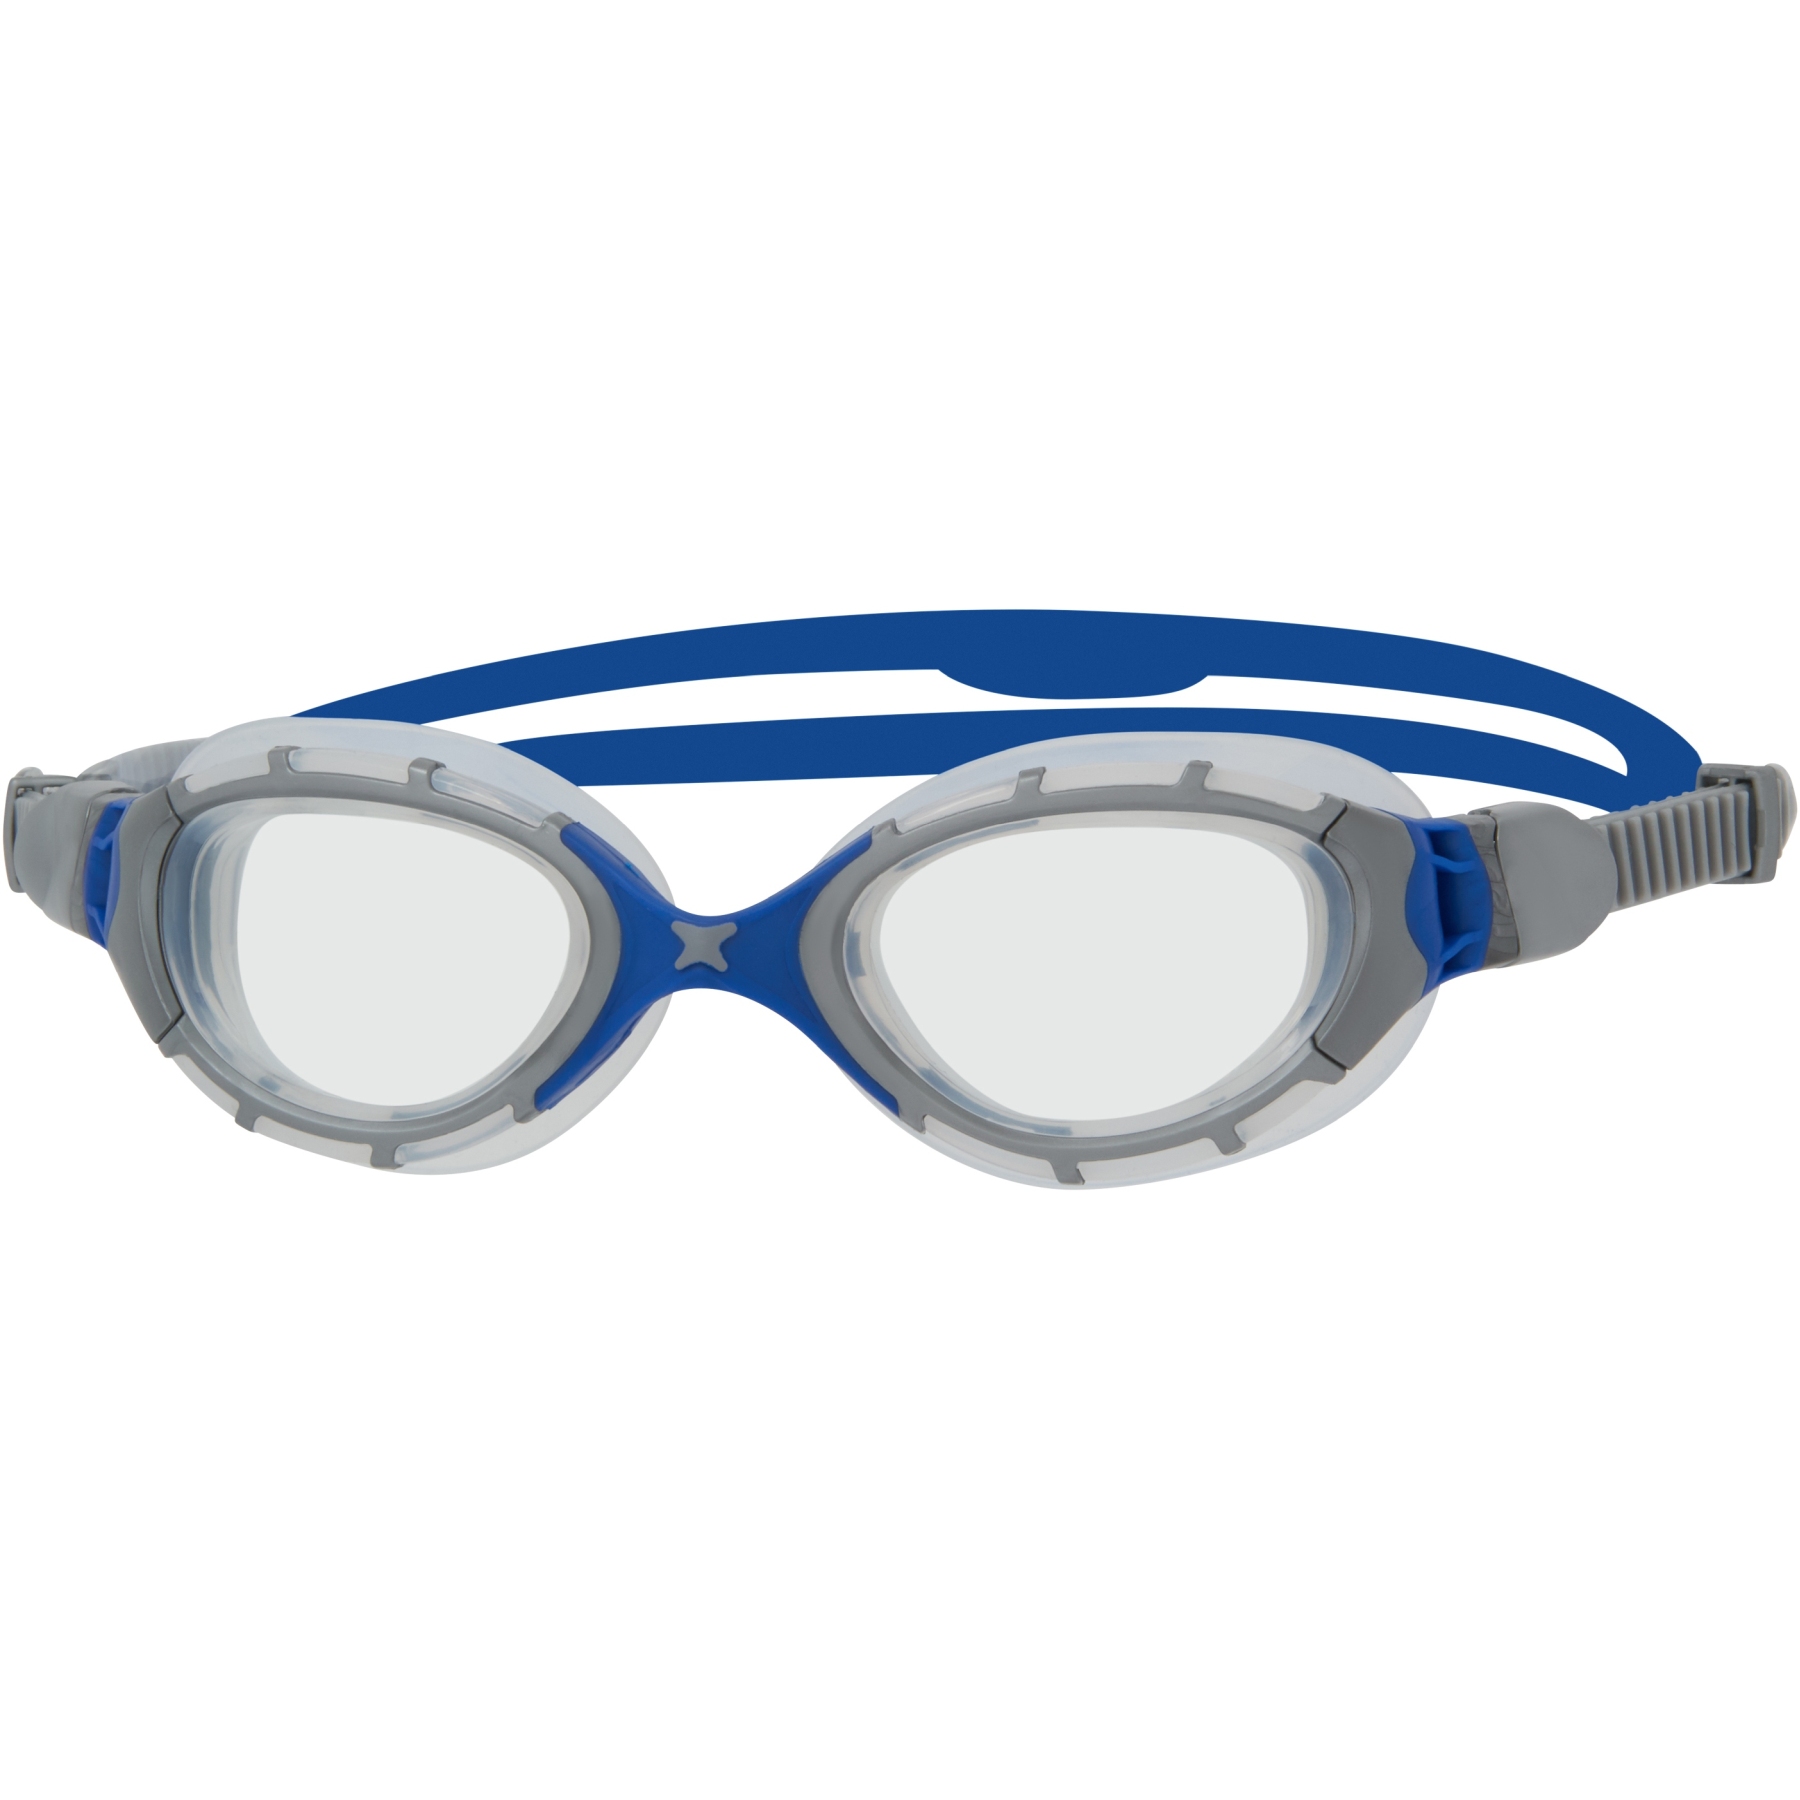 Image of Zoggs Predator Flex Swimming Goggles - grey/blue/clear